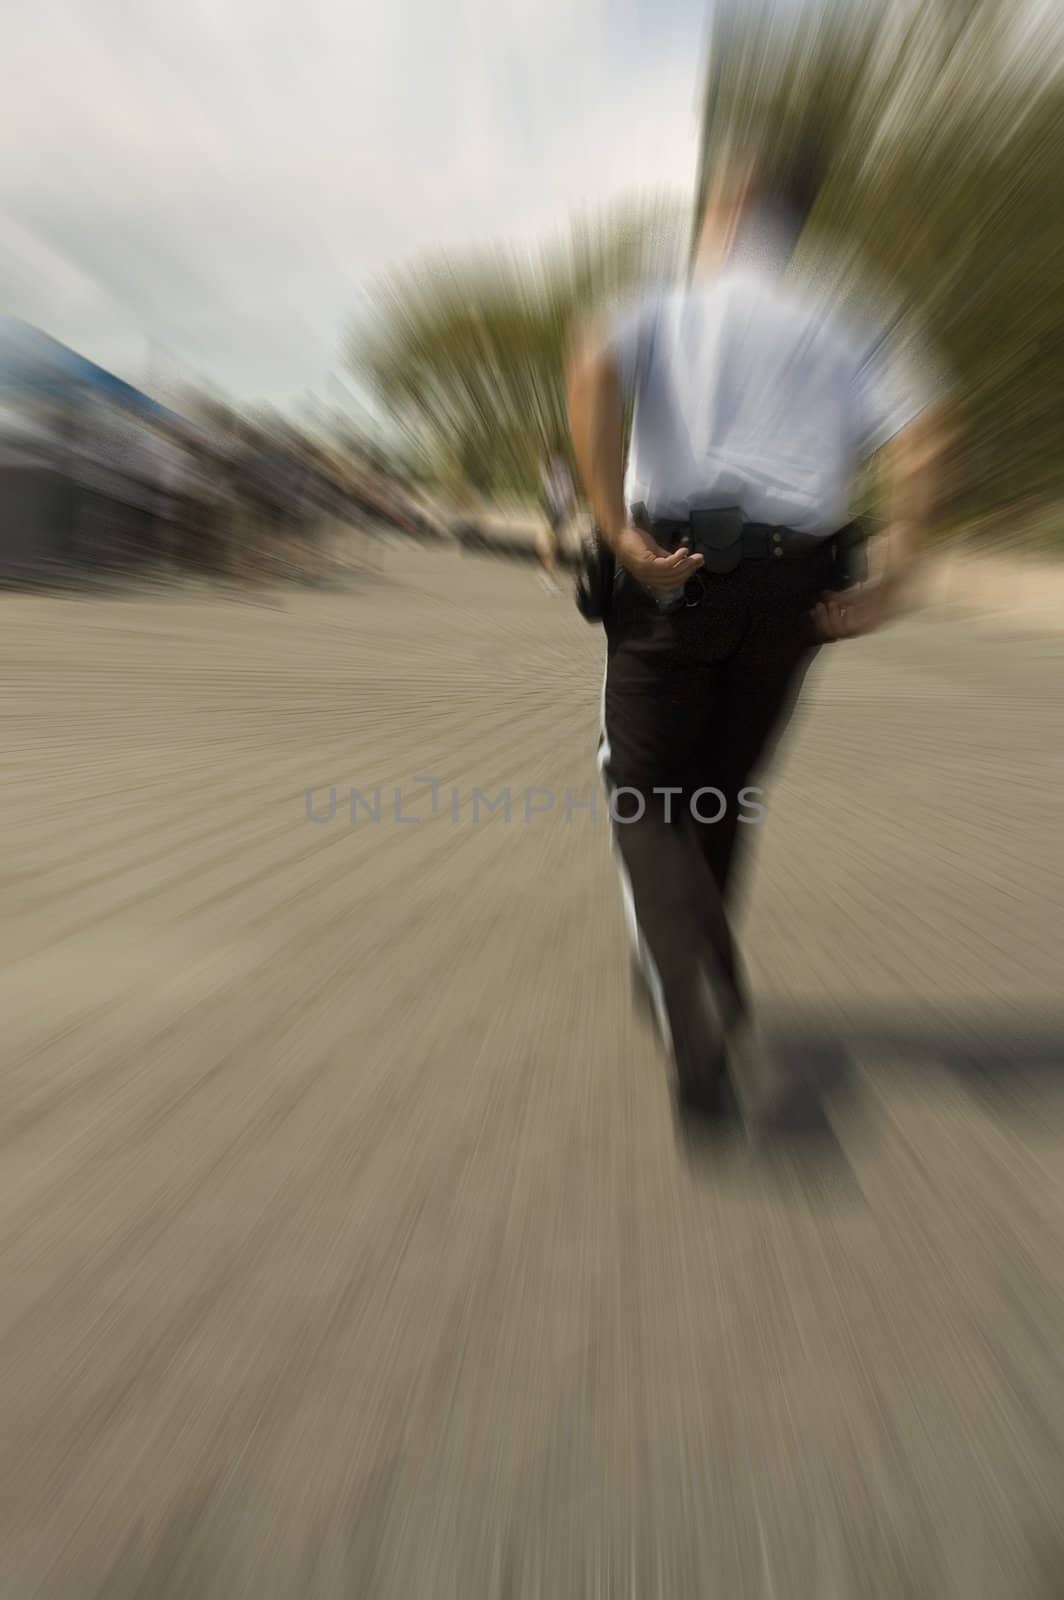 running policeman reaching for his handcuffs, motion blur